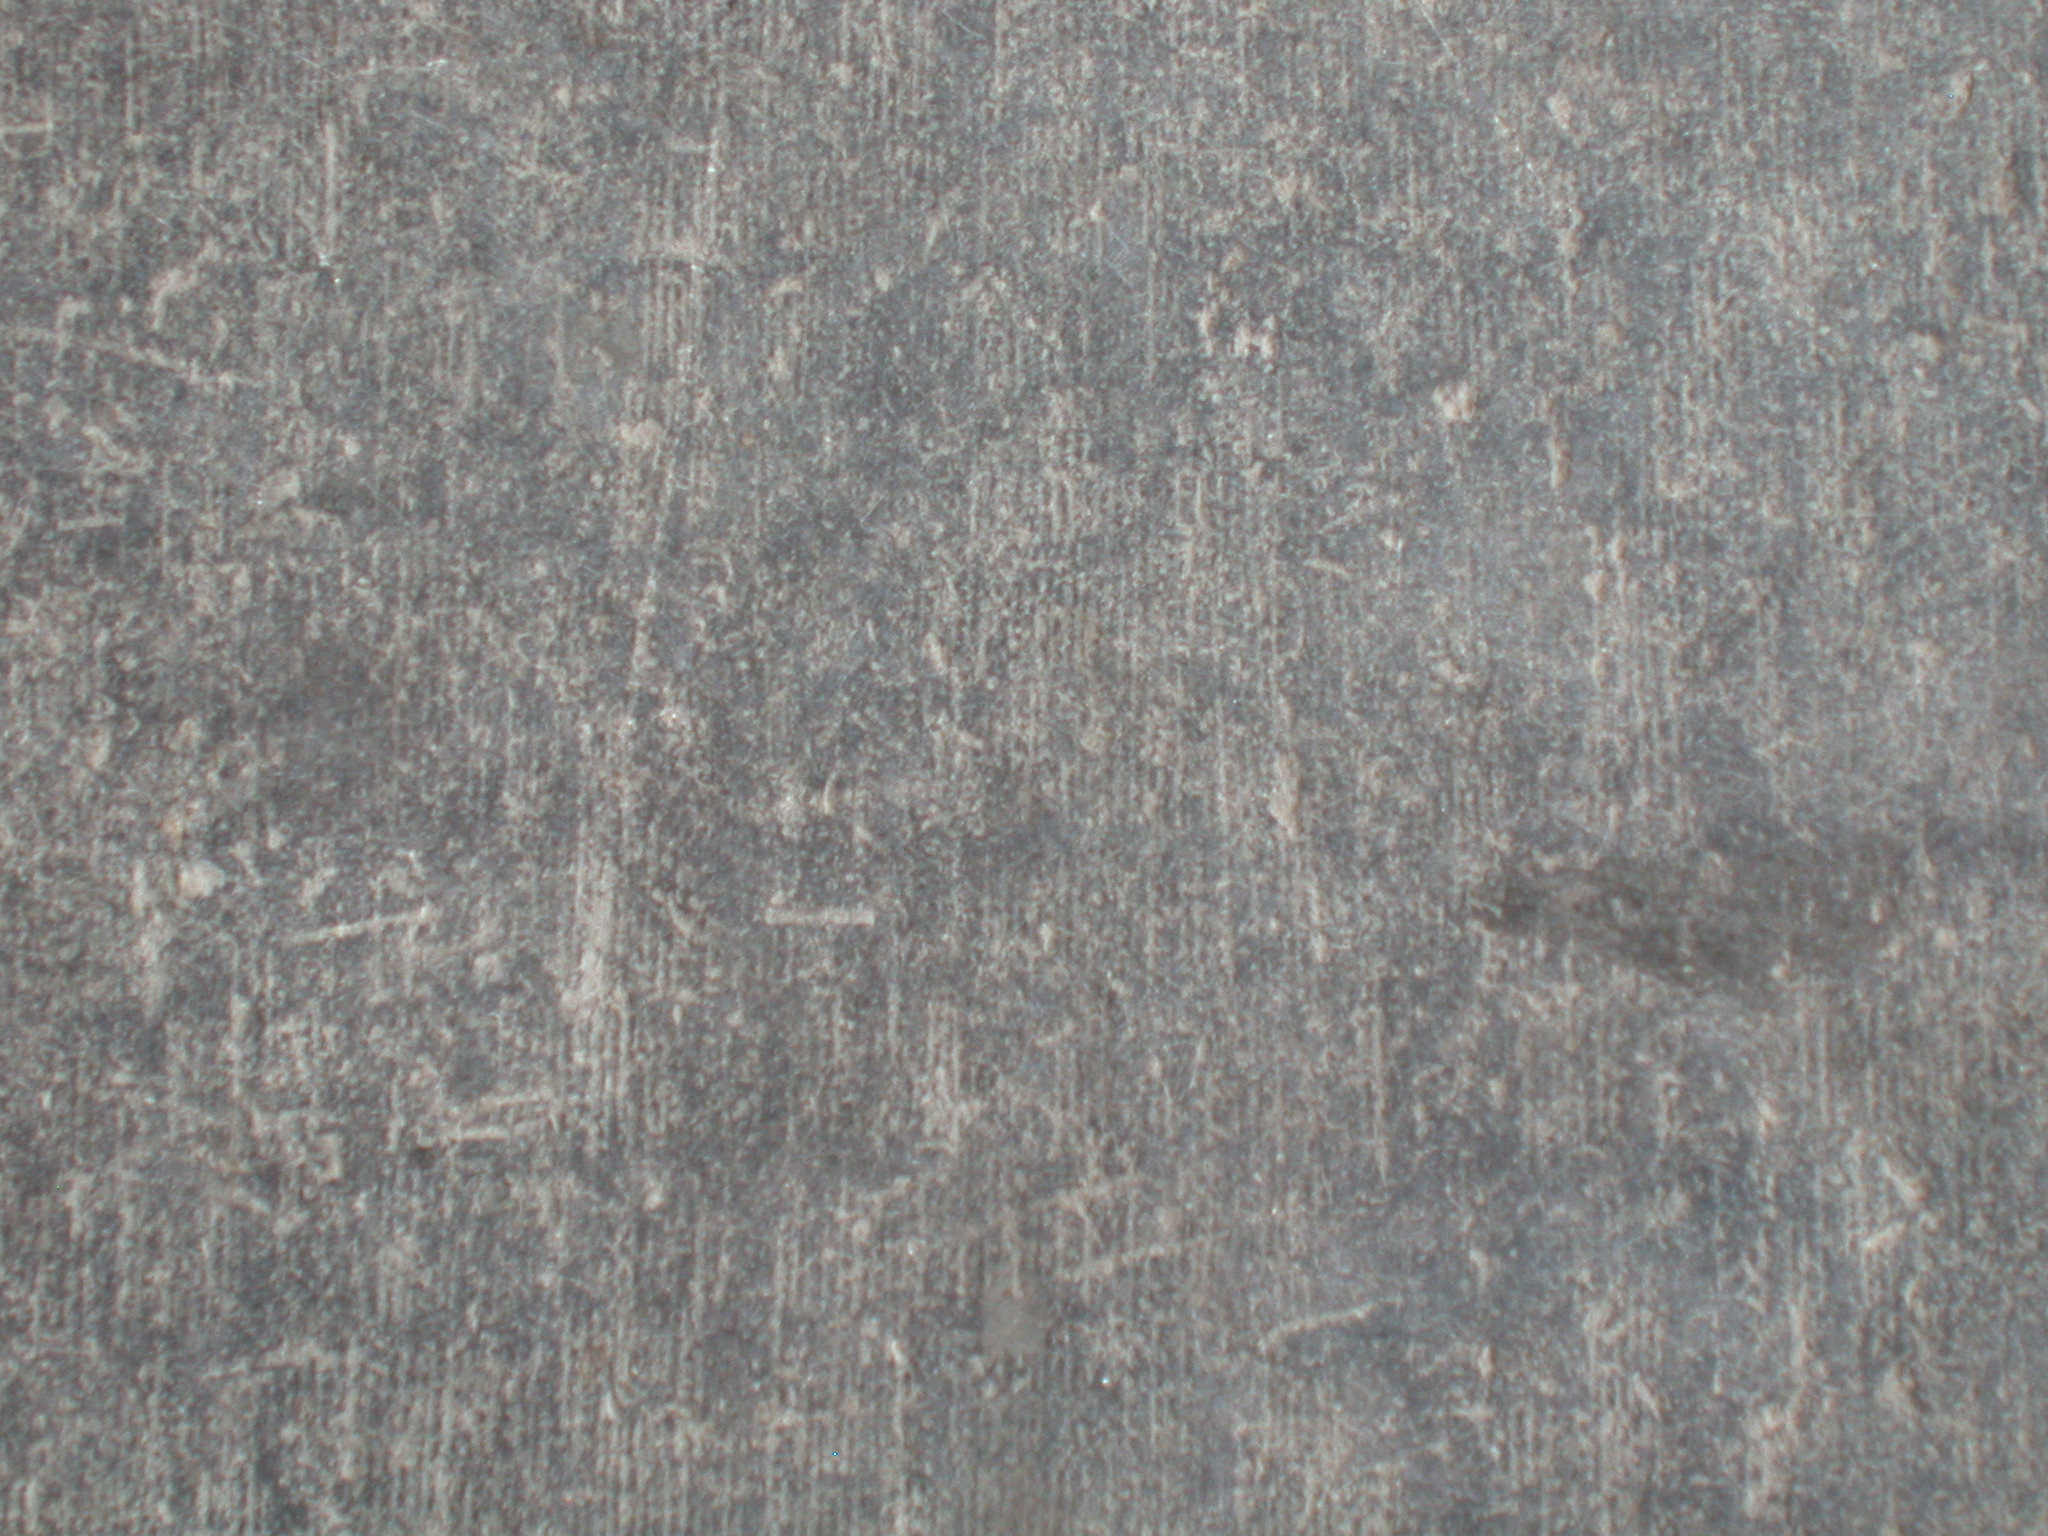 Gray rock texture photo